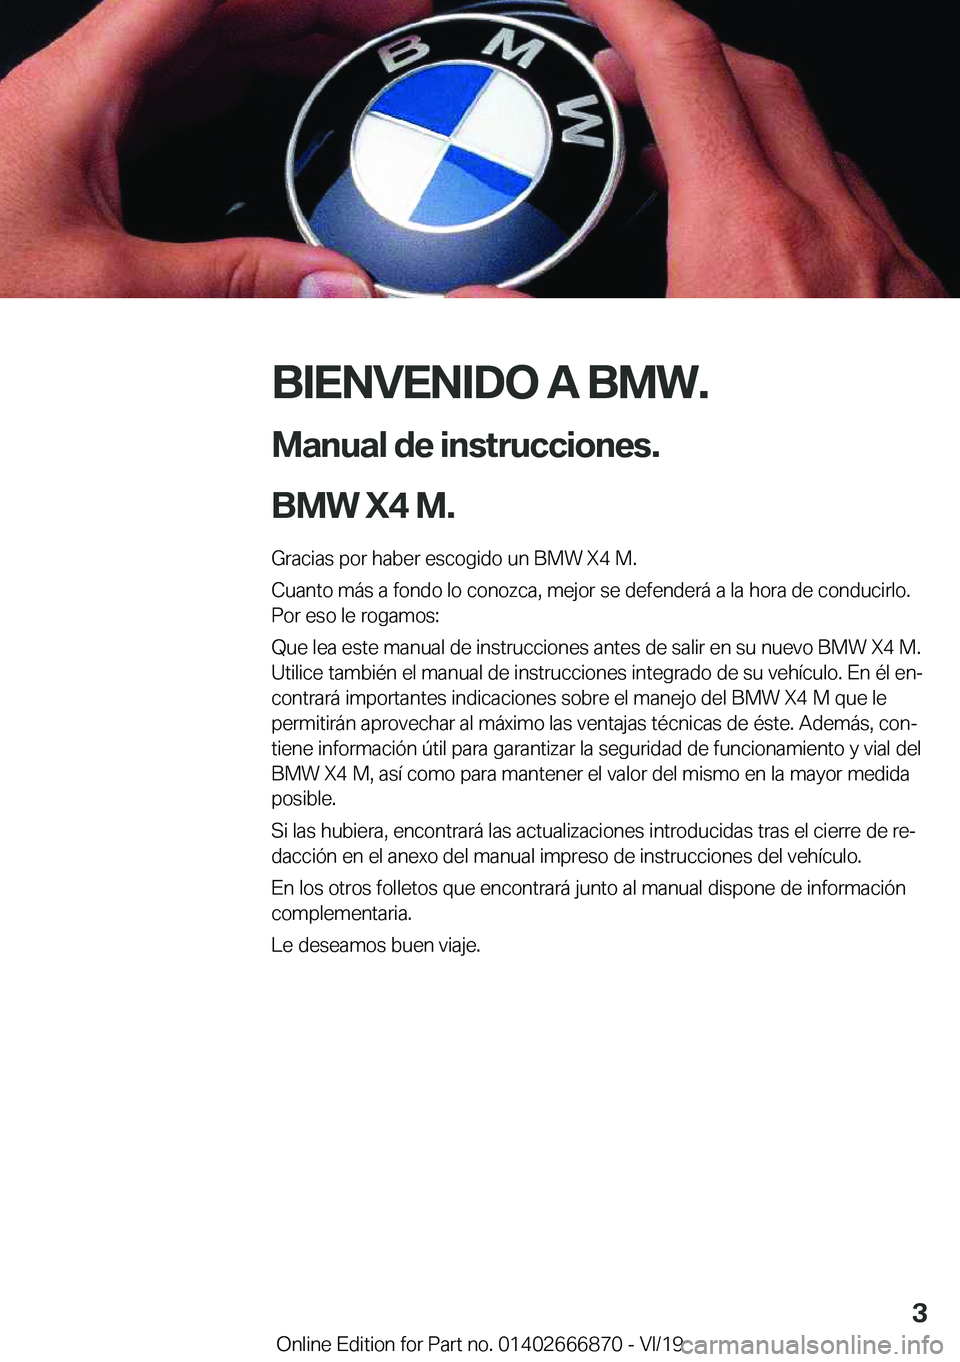 BMW X4 M 2020  Manuales de Empleo (in Spanish) �B�I�E�N�V�E�N�I�D�O��A��B�M�W�.
�M�a�n�u�a�l��d�e��i�n�s�t�r�u�c�c�i�o�n�e�s�.
�B�M�W��X�4��M�. �G�r�a�c�i�a�s��p�o�r��h�a�b�e�r��e�s�c�o�g�i�d�o��u�n��B�M�W��X�4��M�.
�C�u�a�n�t�o��m�